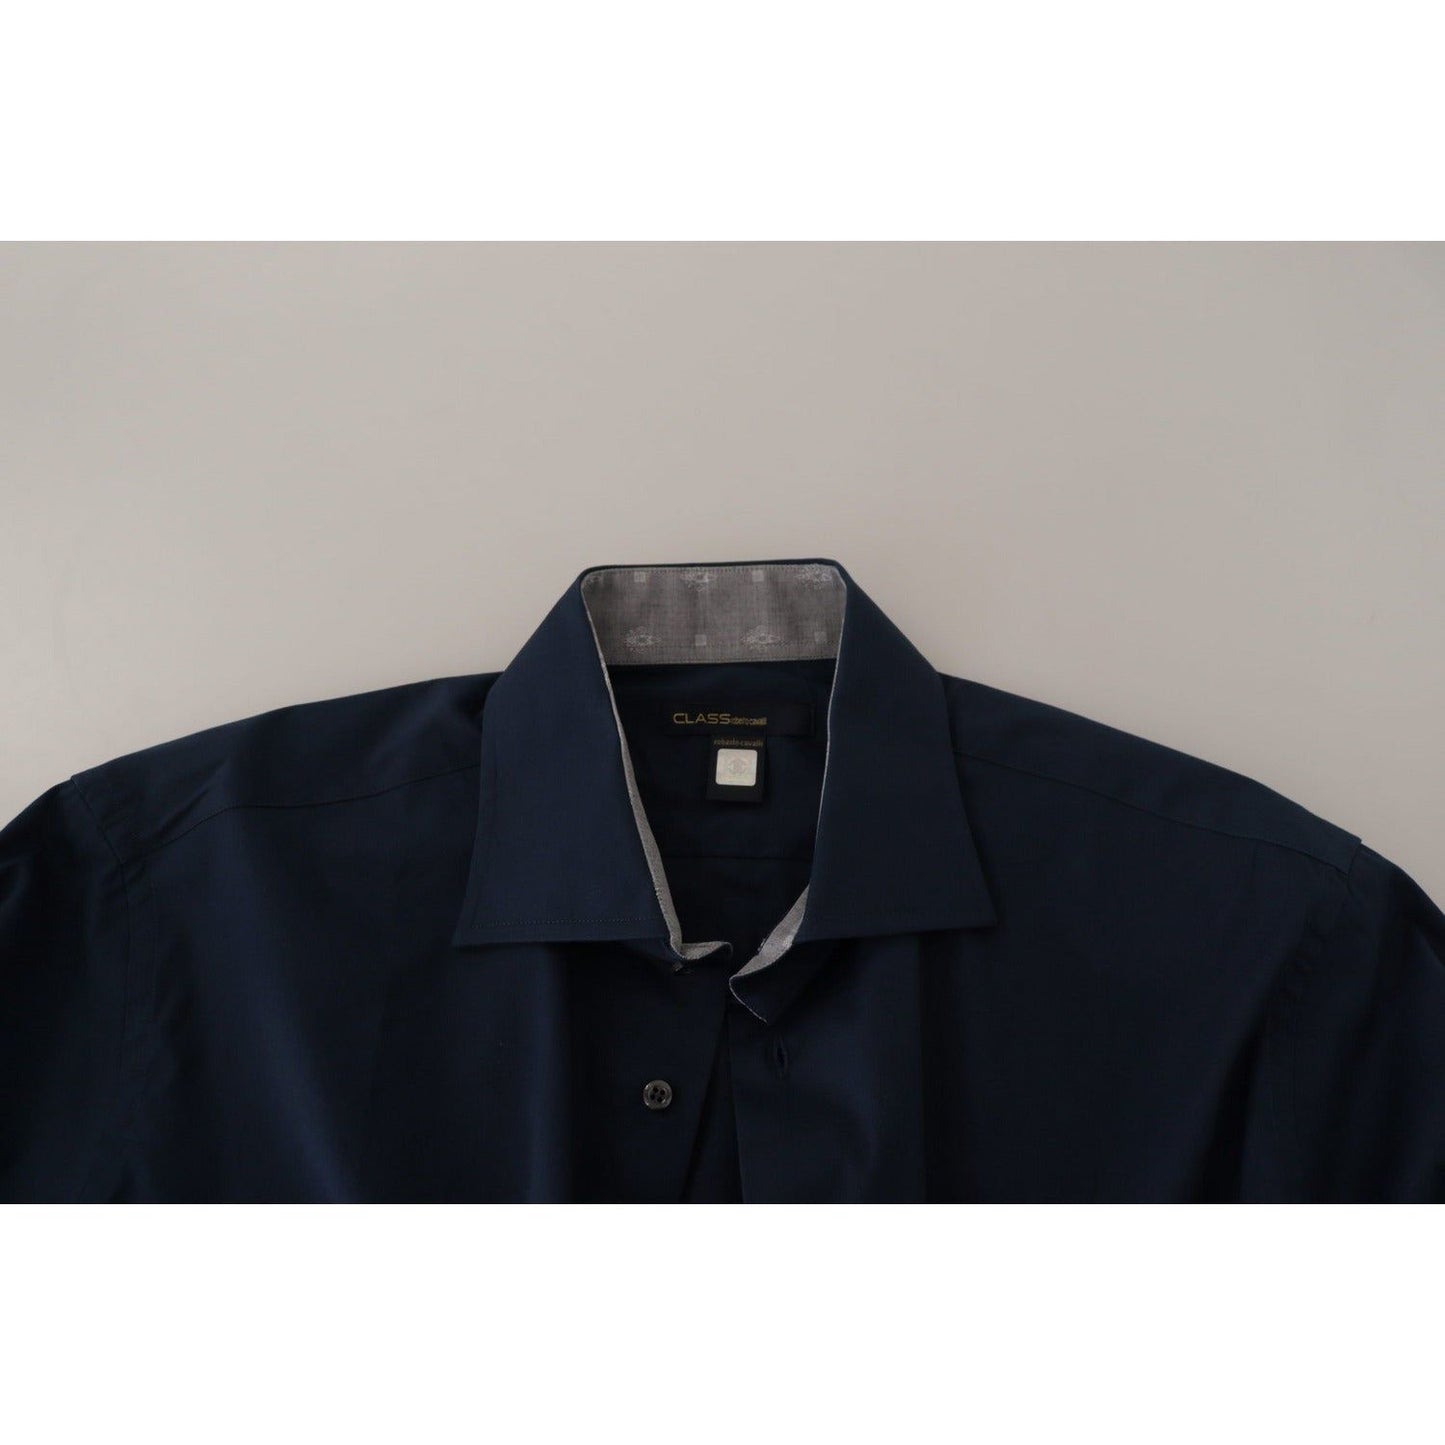 Roberto Cavalli Navy Elegance Cotton Dress Shirt navy-blue-cotton-dress-formal-shirt IMG_2051-scaled-6a0cbad7-24e.jpg